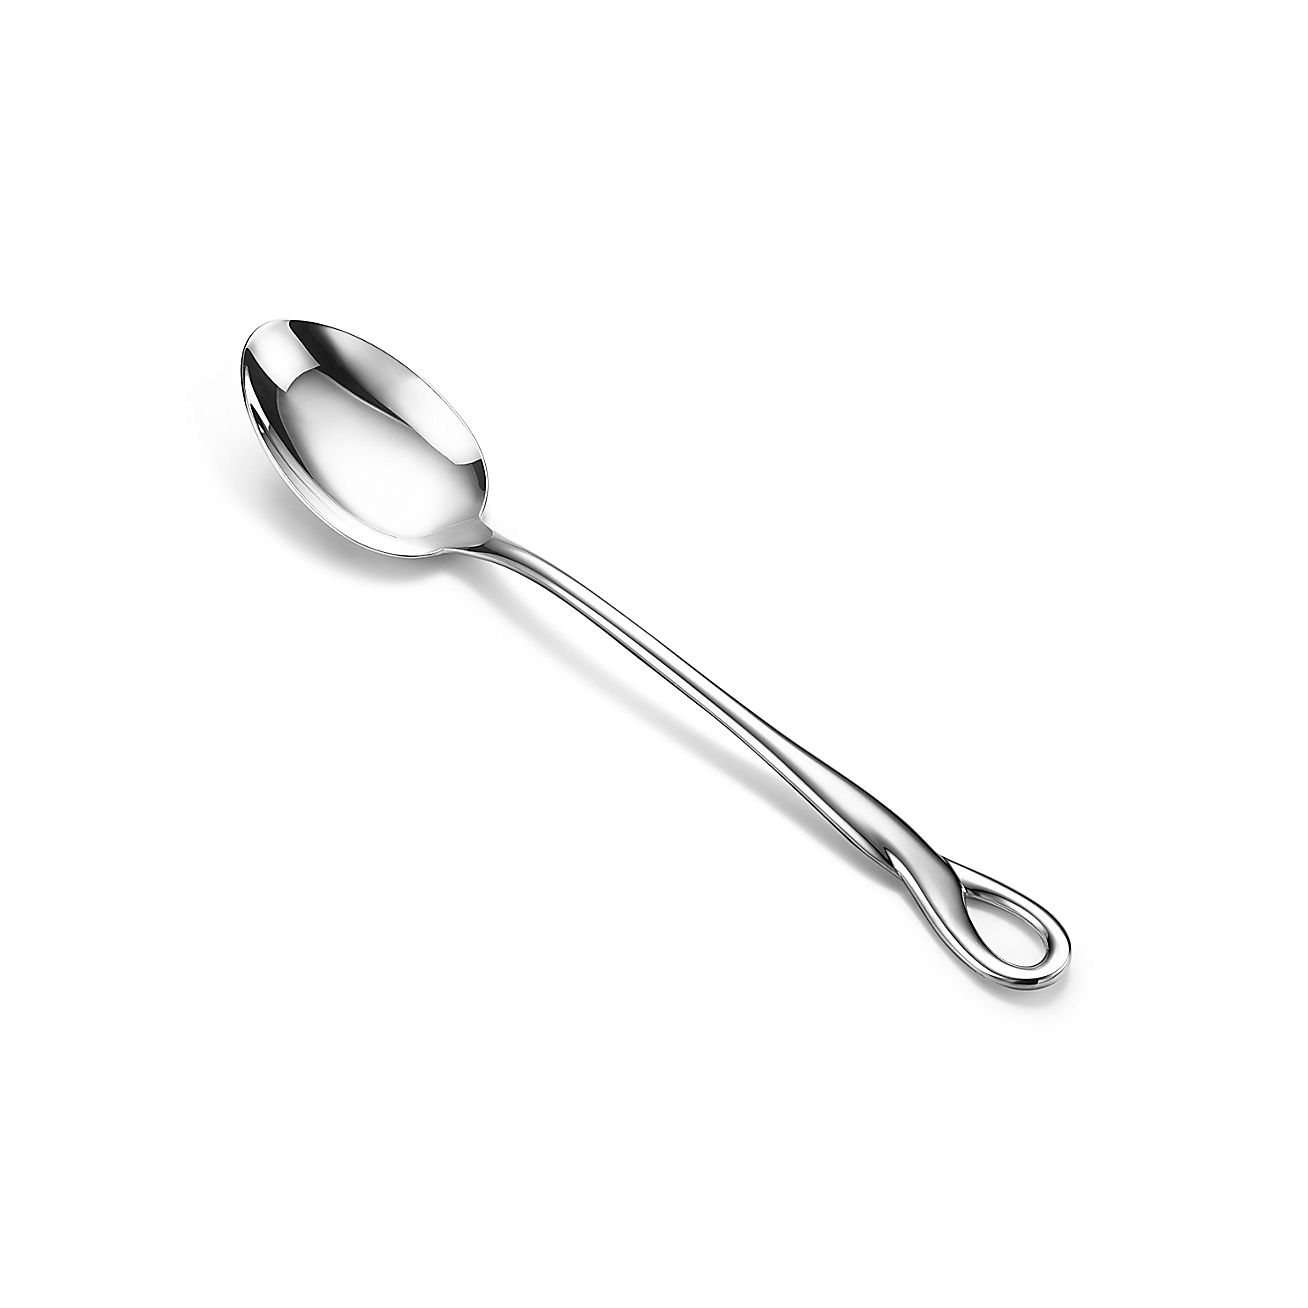 Tag: Cucchiaio d'argento